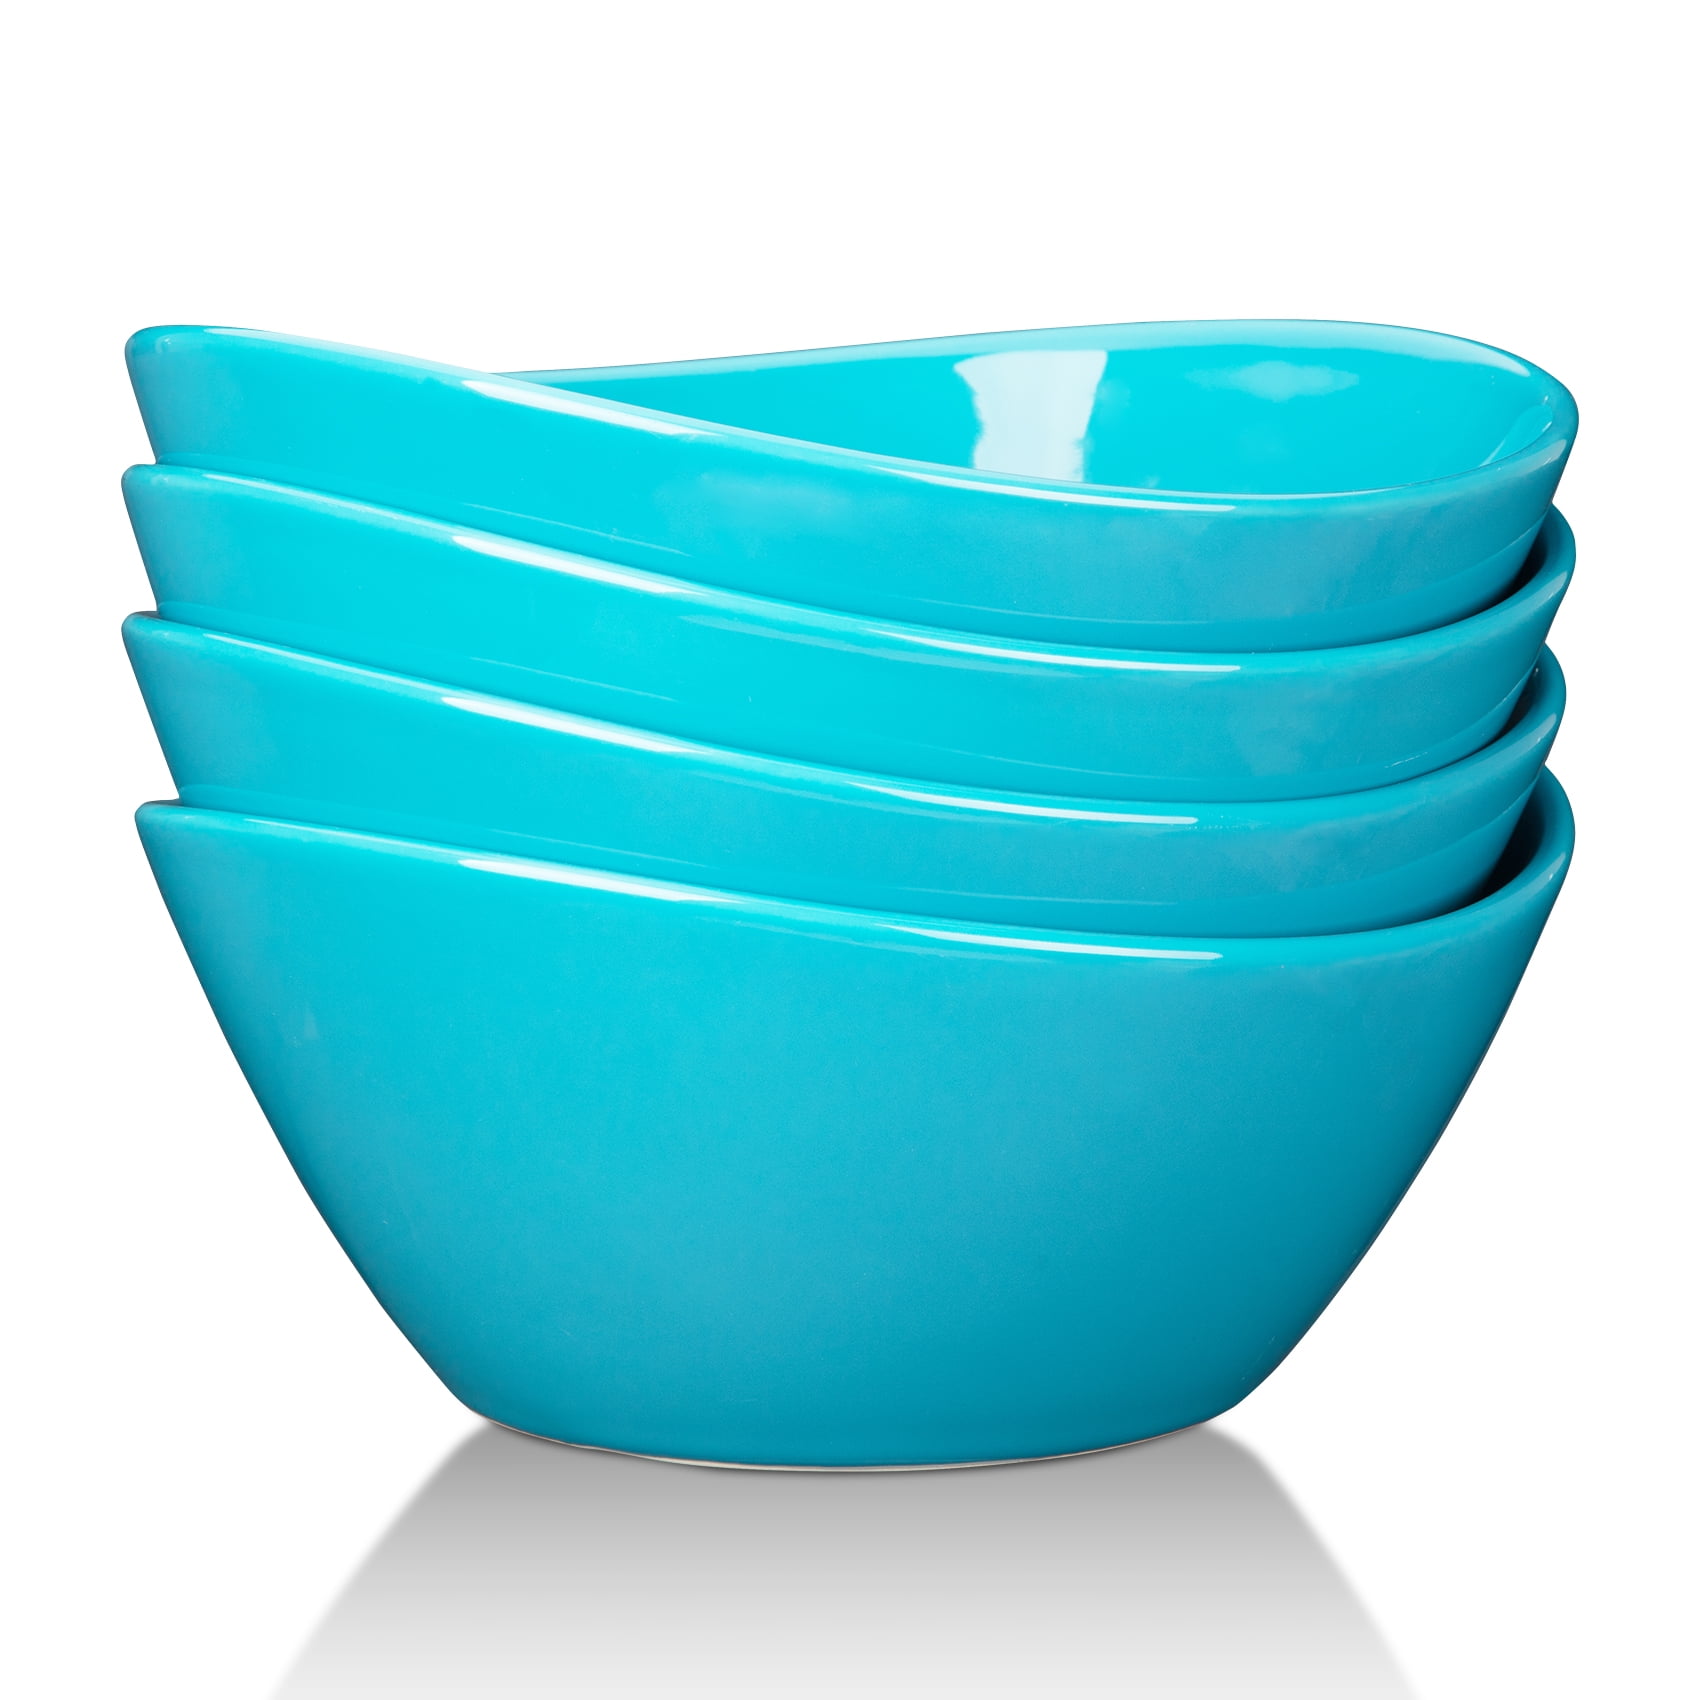  Borosil Serving Bowls for Entertaining, Set of 2, (24/32 OZ),  Lightweight Ceramic Bowls, Large Bowls for Food Storage, Mixing bowls with  lids, Prep bowls for Salad, Pasta, Microwave & Dishwasher Safe